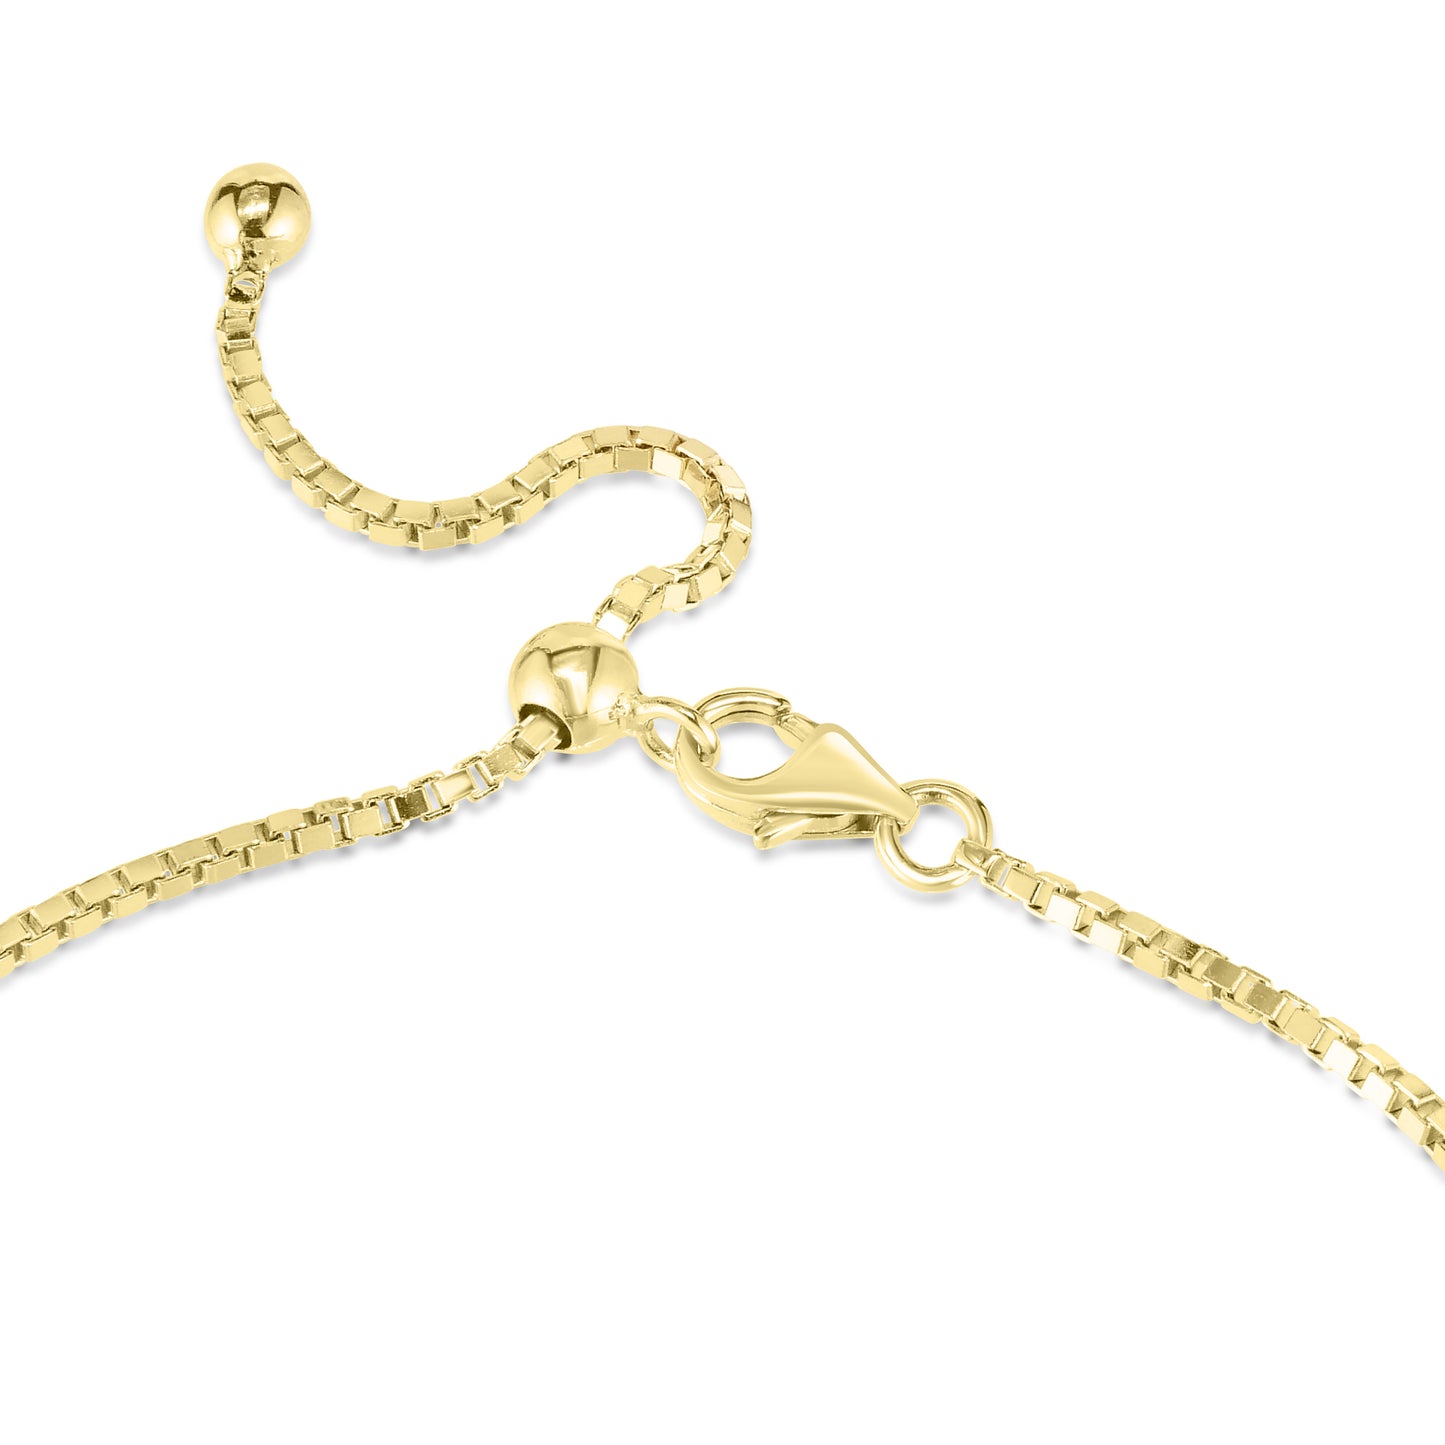 The Gold Slight Shimmer Adjustable Bolo Bracelet